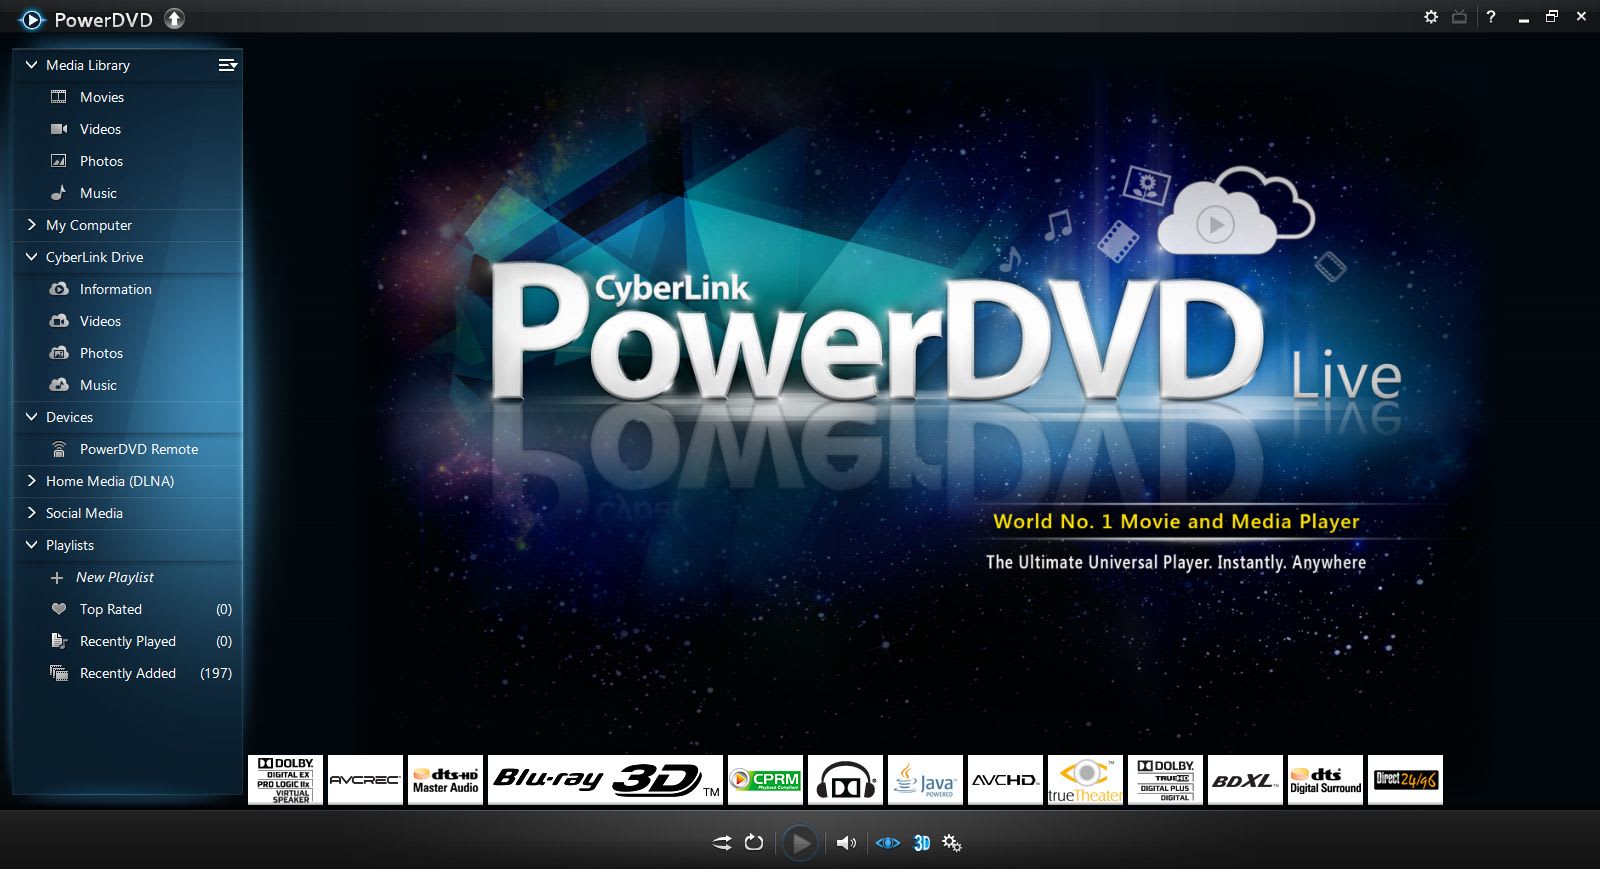 powerdvd 12 player free download